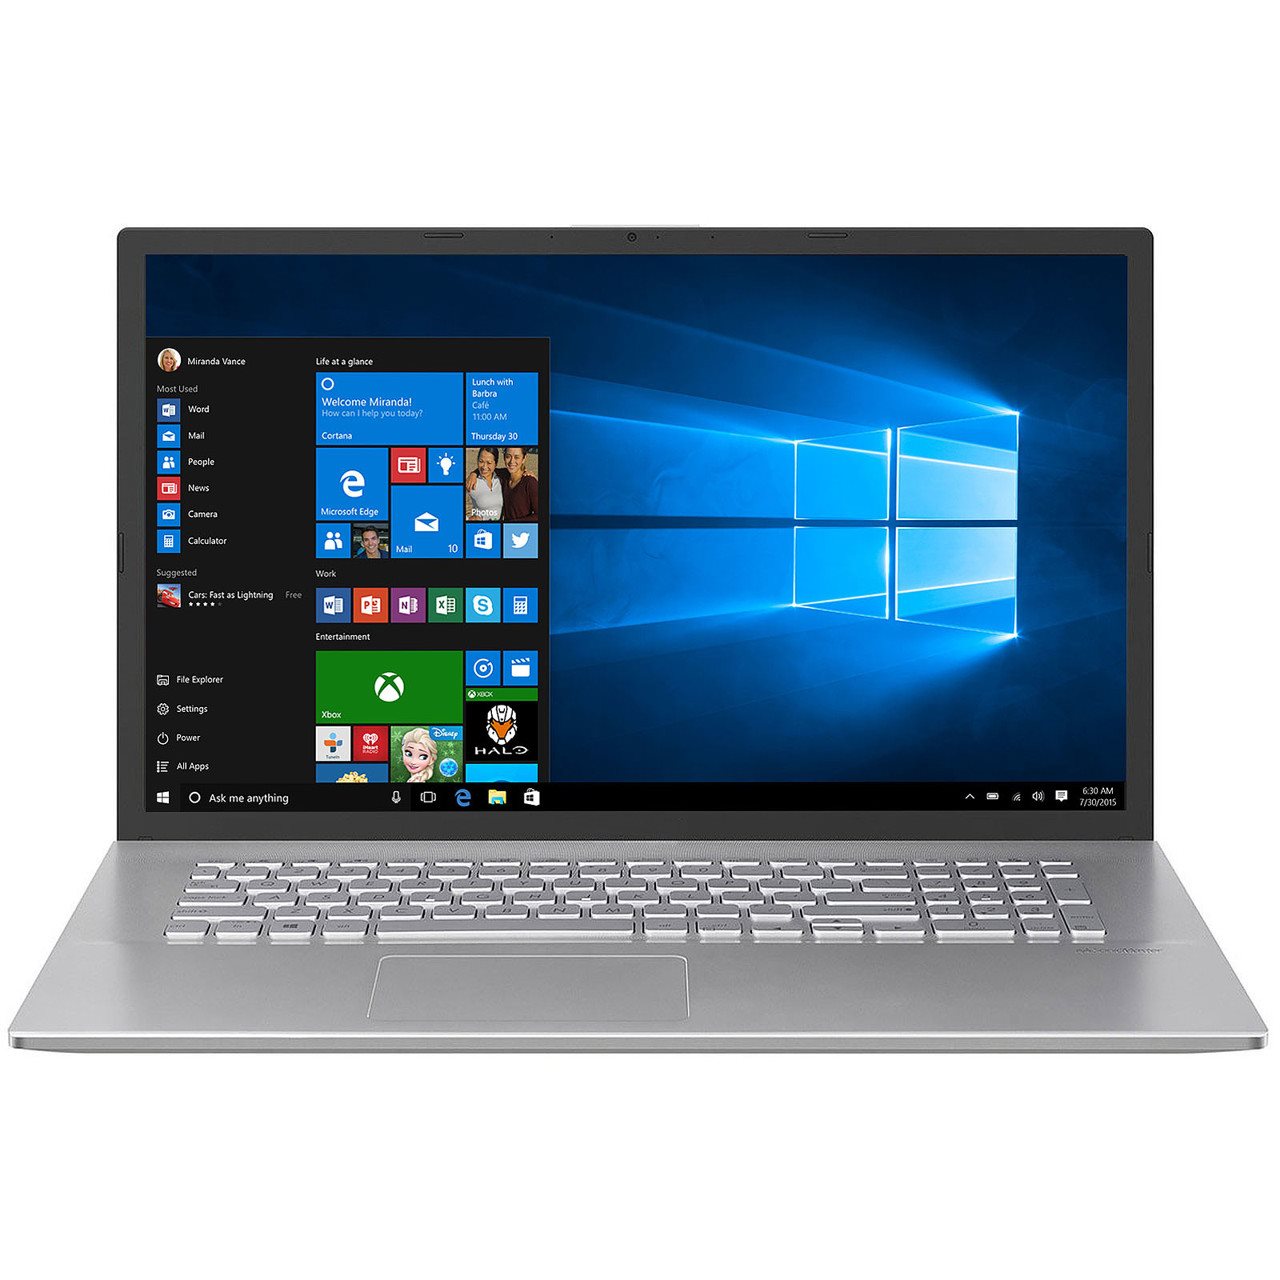 Laptop Asus P1701CE (i3-1115G4, 4GB, 256GB, W10P) Silver